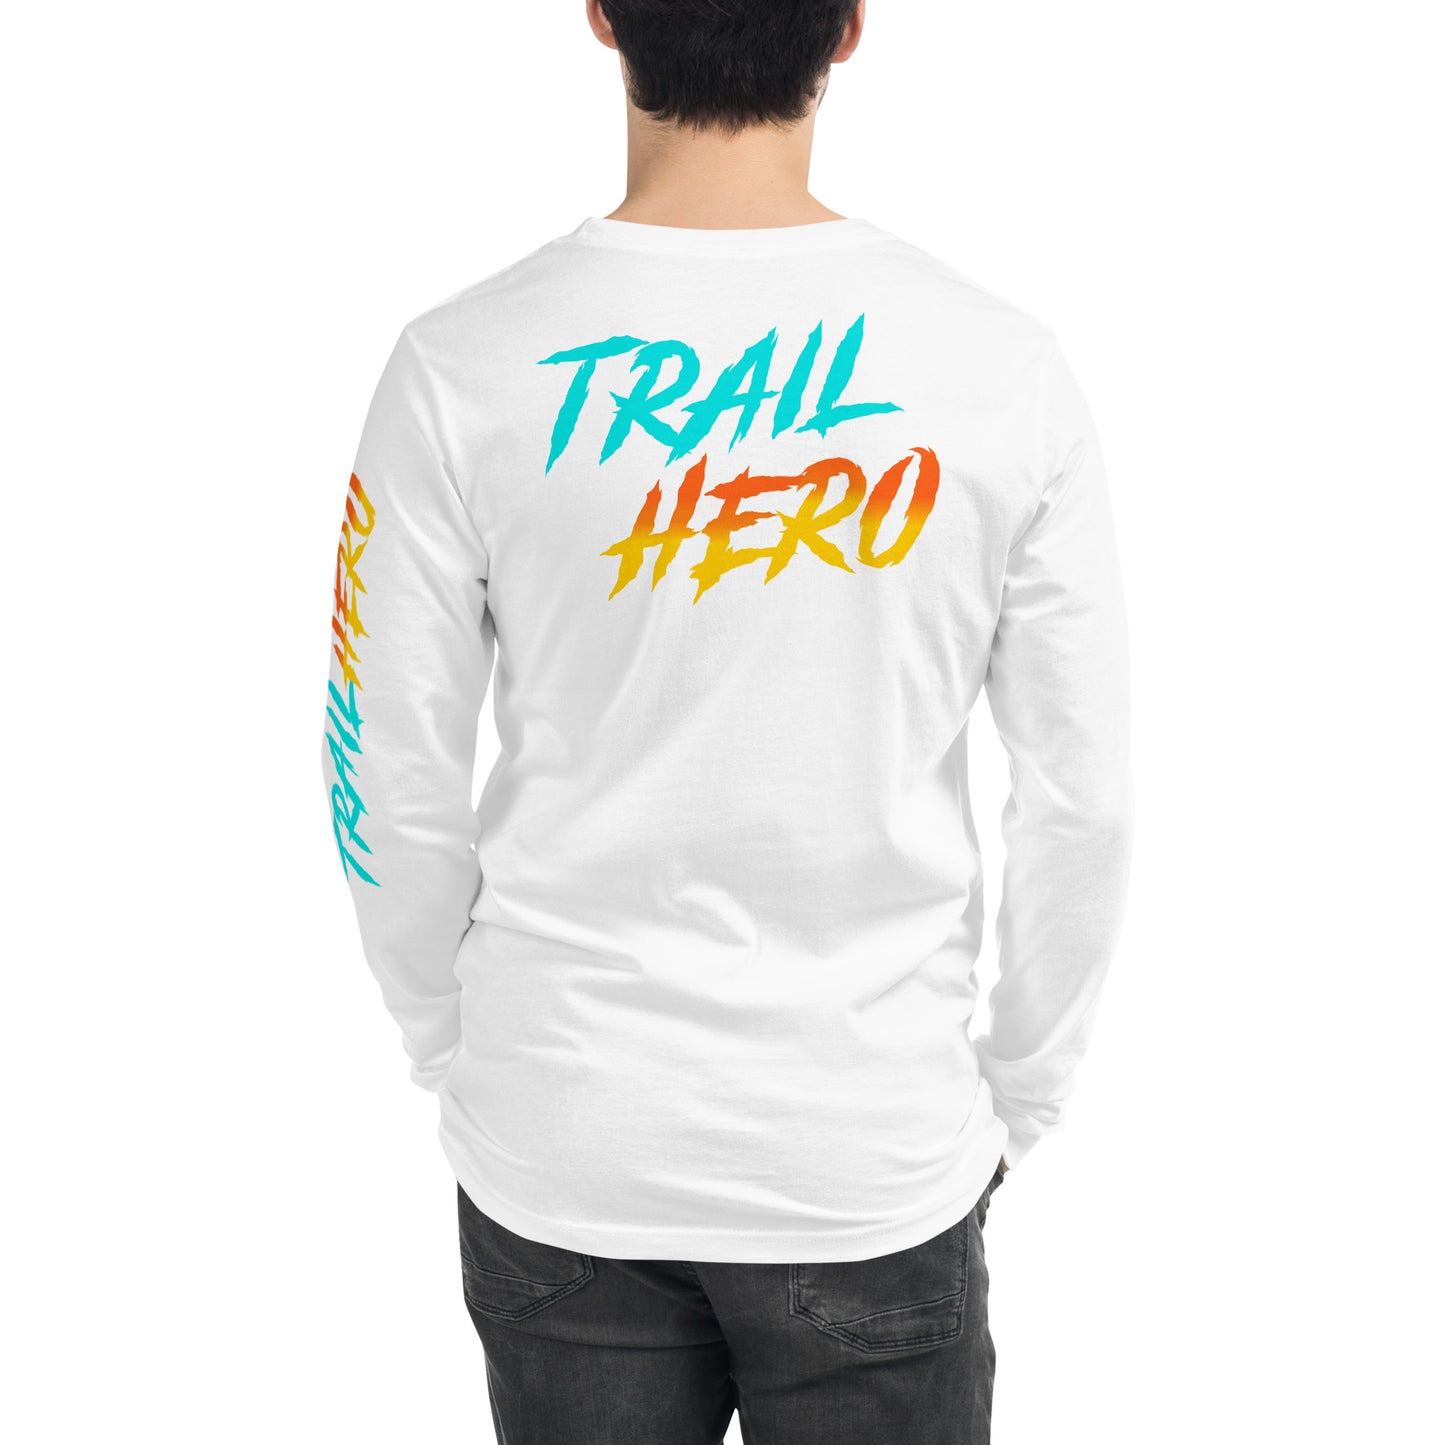 Trail Hero - Unisex - 100% Cotton Long Sleeve Tee - 7 Colors